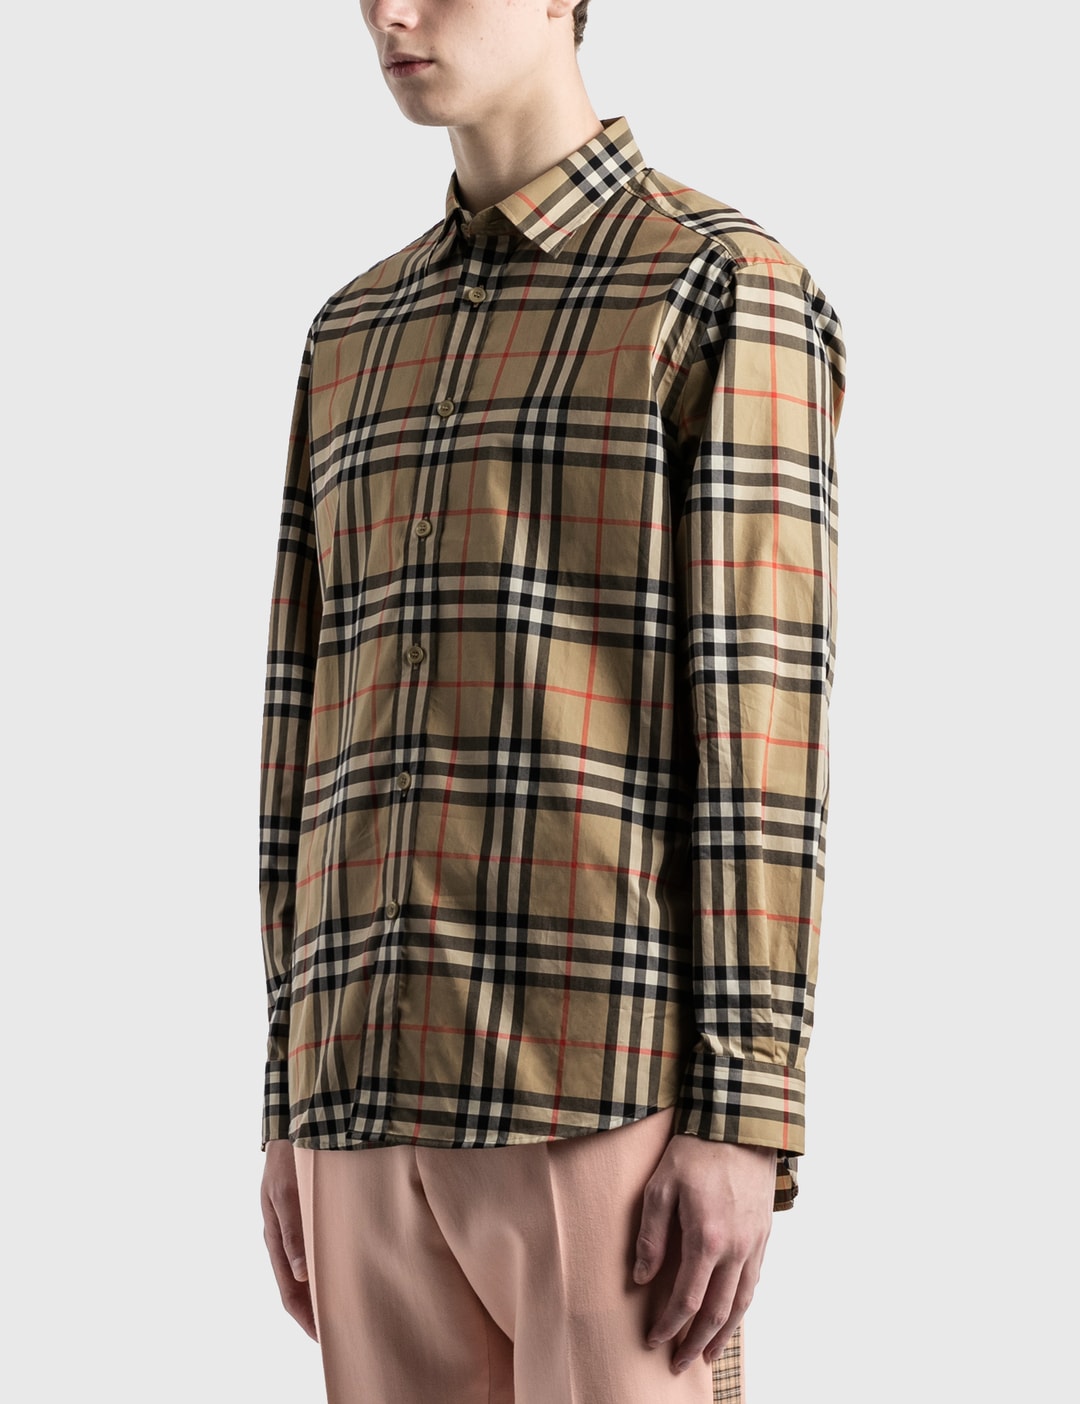 Burberry - Check Cotton Poplin Shirt | HBX - Globally Curated Fashion ...